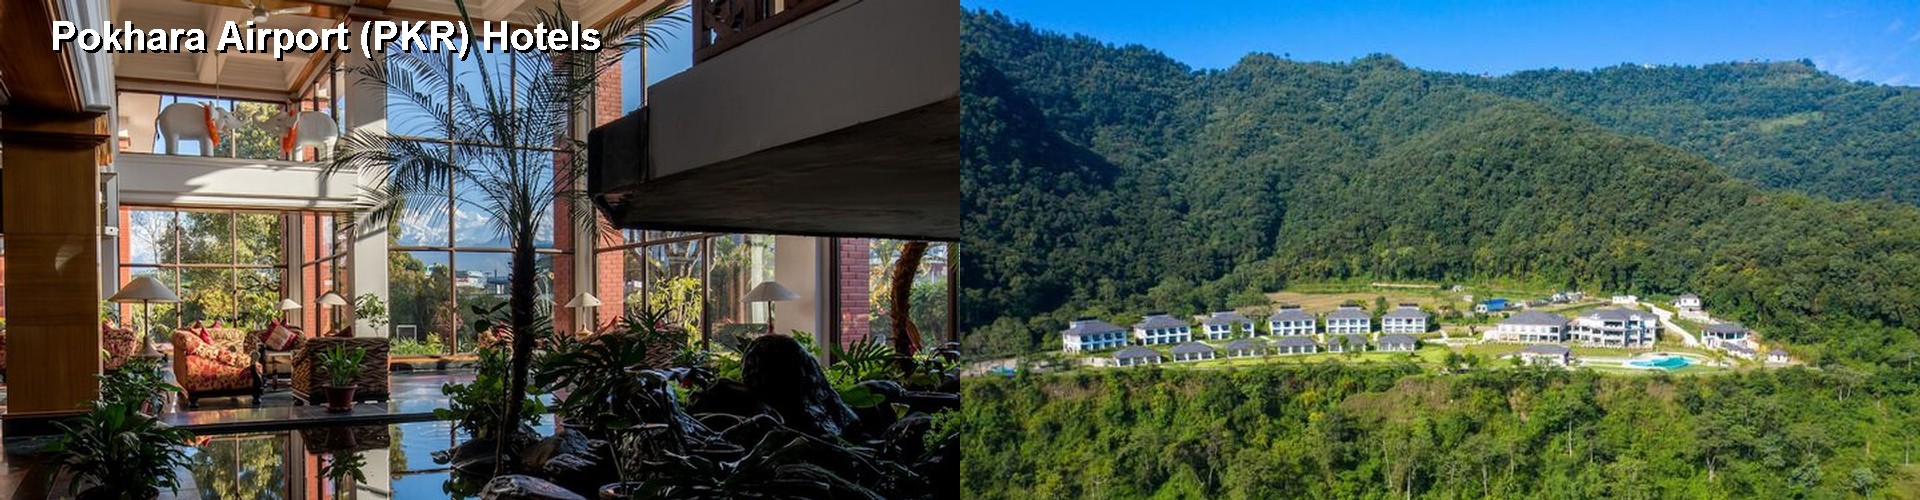 4 Best Hotels near Pokhara Airport (PKR)